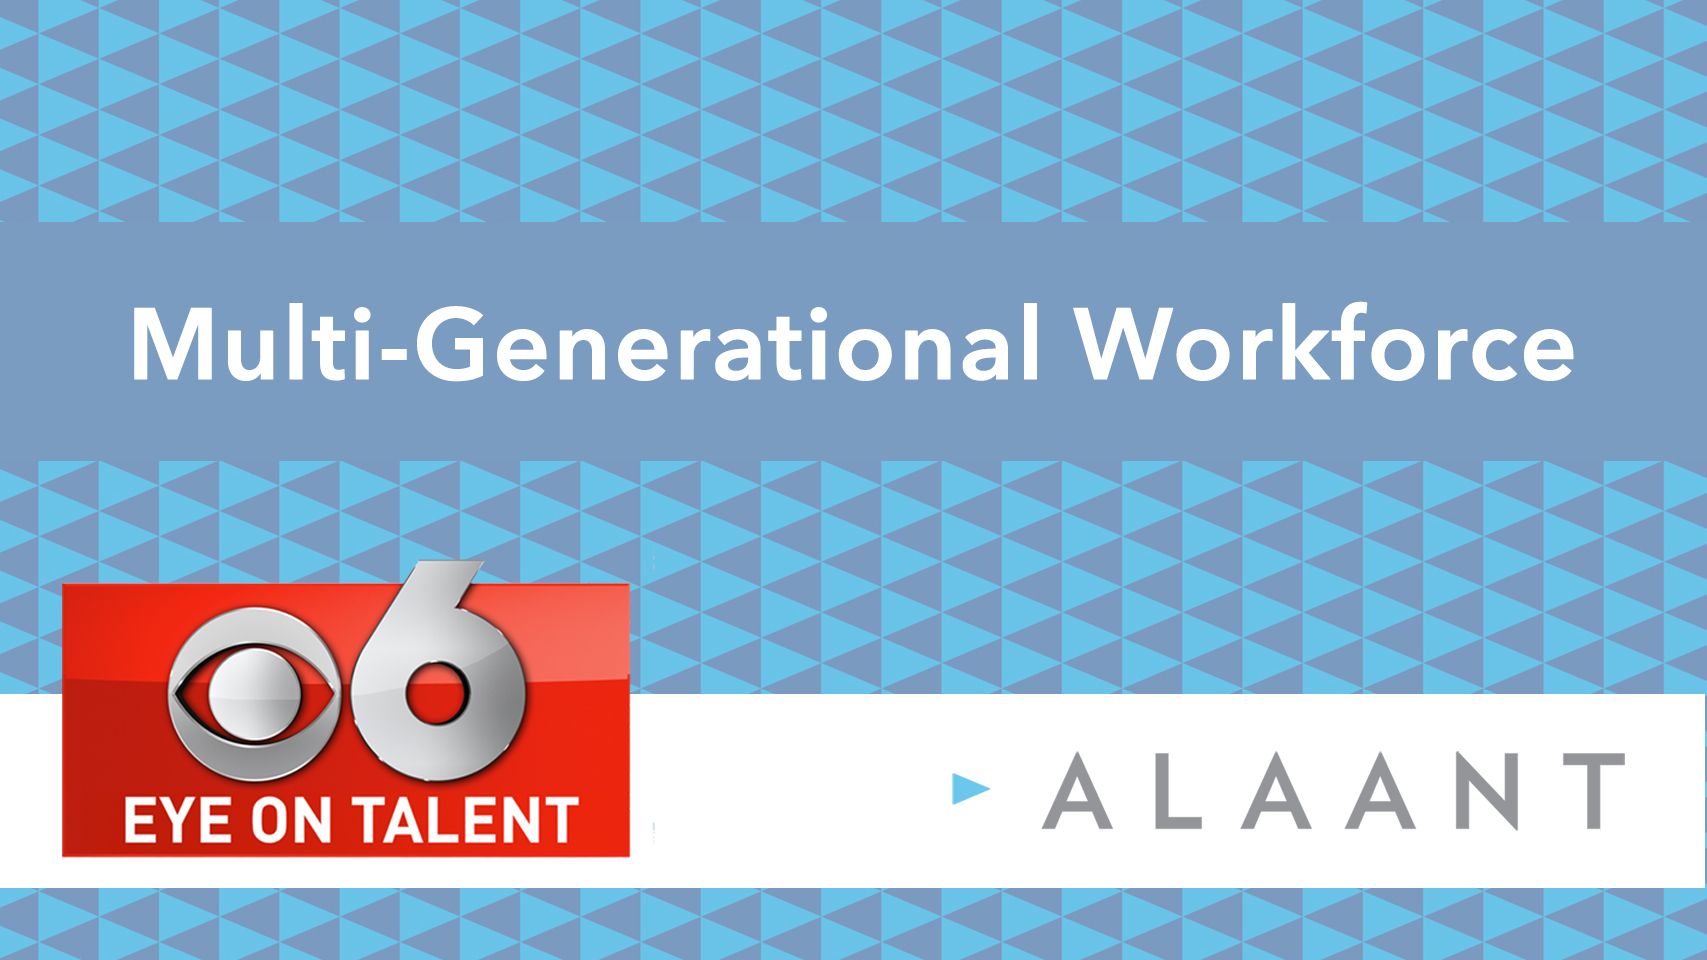 Alaant Eye on Talent Multi-Generational Workforce